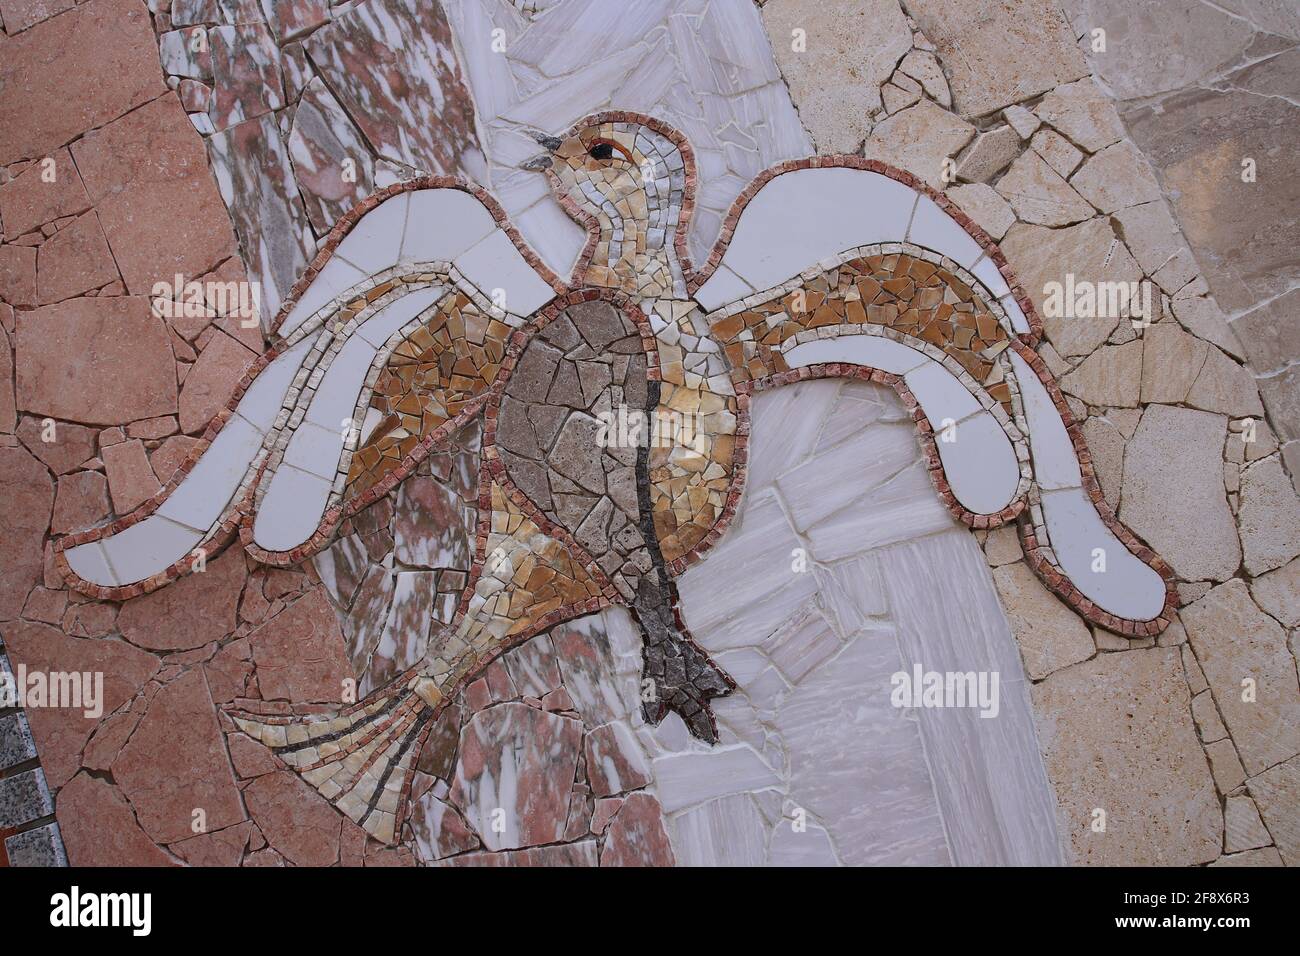 Creative colorful design mozaic art in the shape of bird. Stock Photo